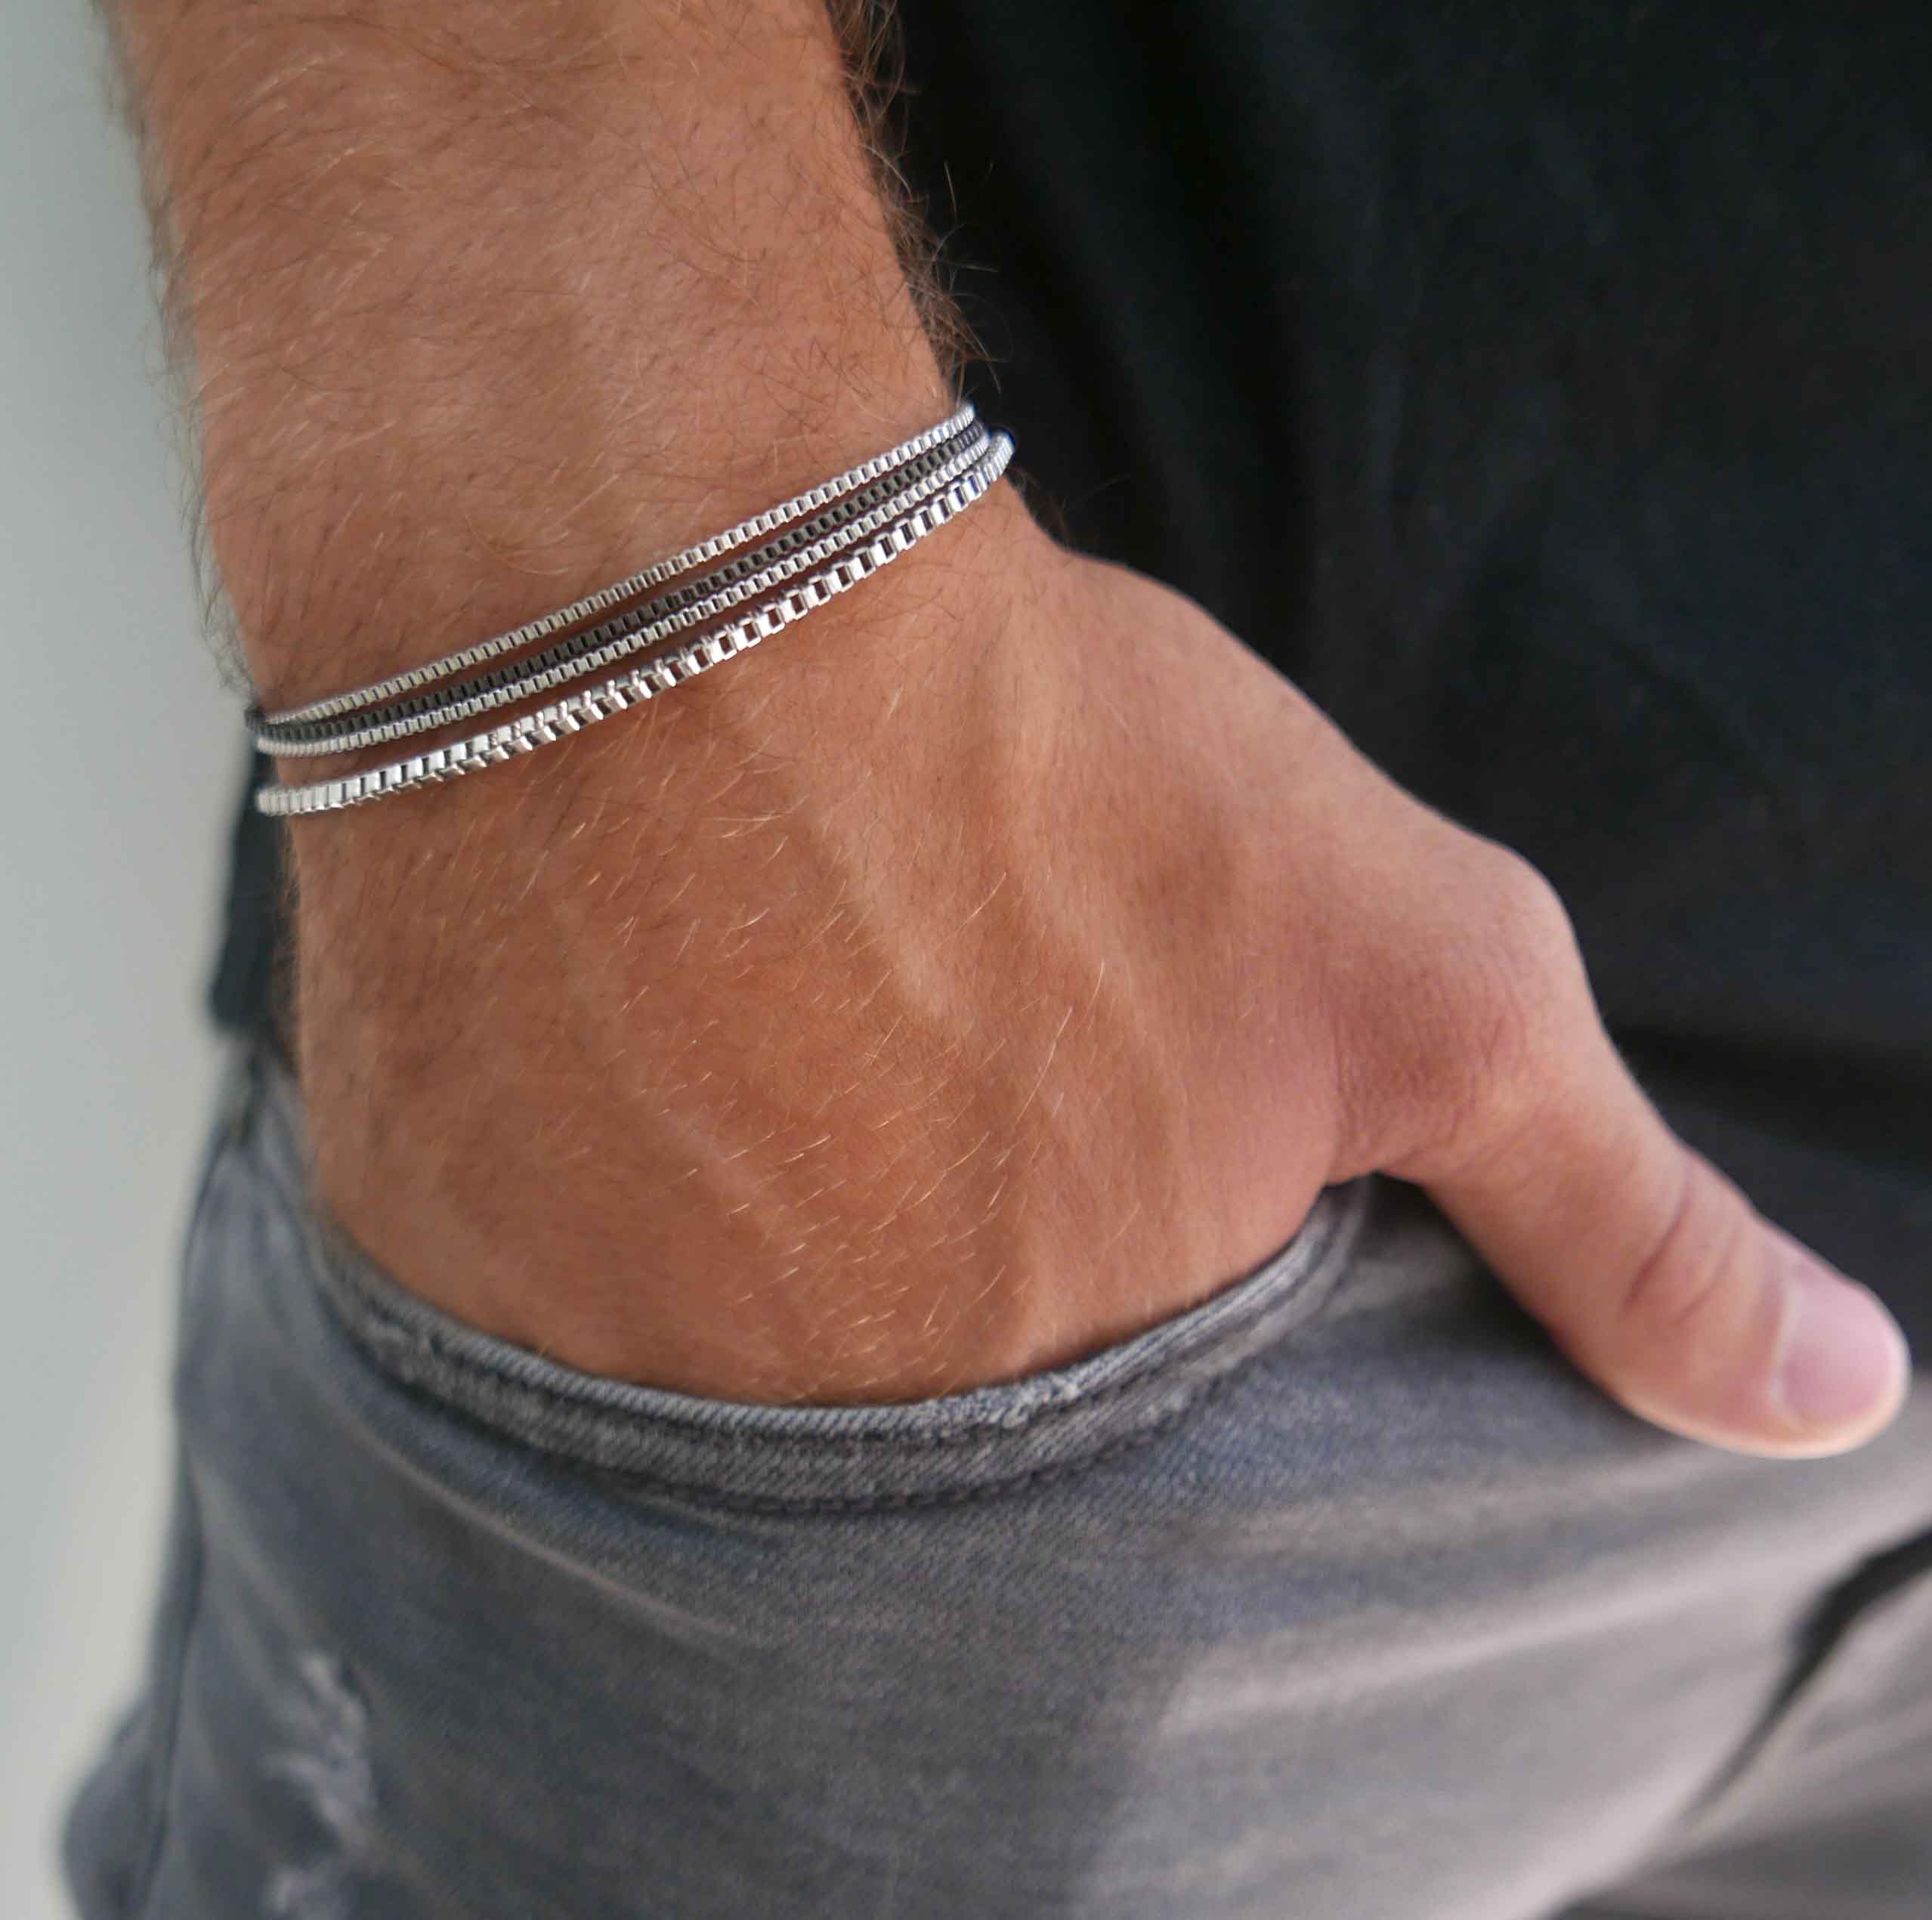 Chain Bracelet For Men Cuff Bracelet For Men Jewelry For Men Handmade Cuff Gray Genuine Leather Bracelet For Men Set With Silver Plated Chain By Galis Jewelry